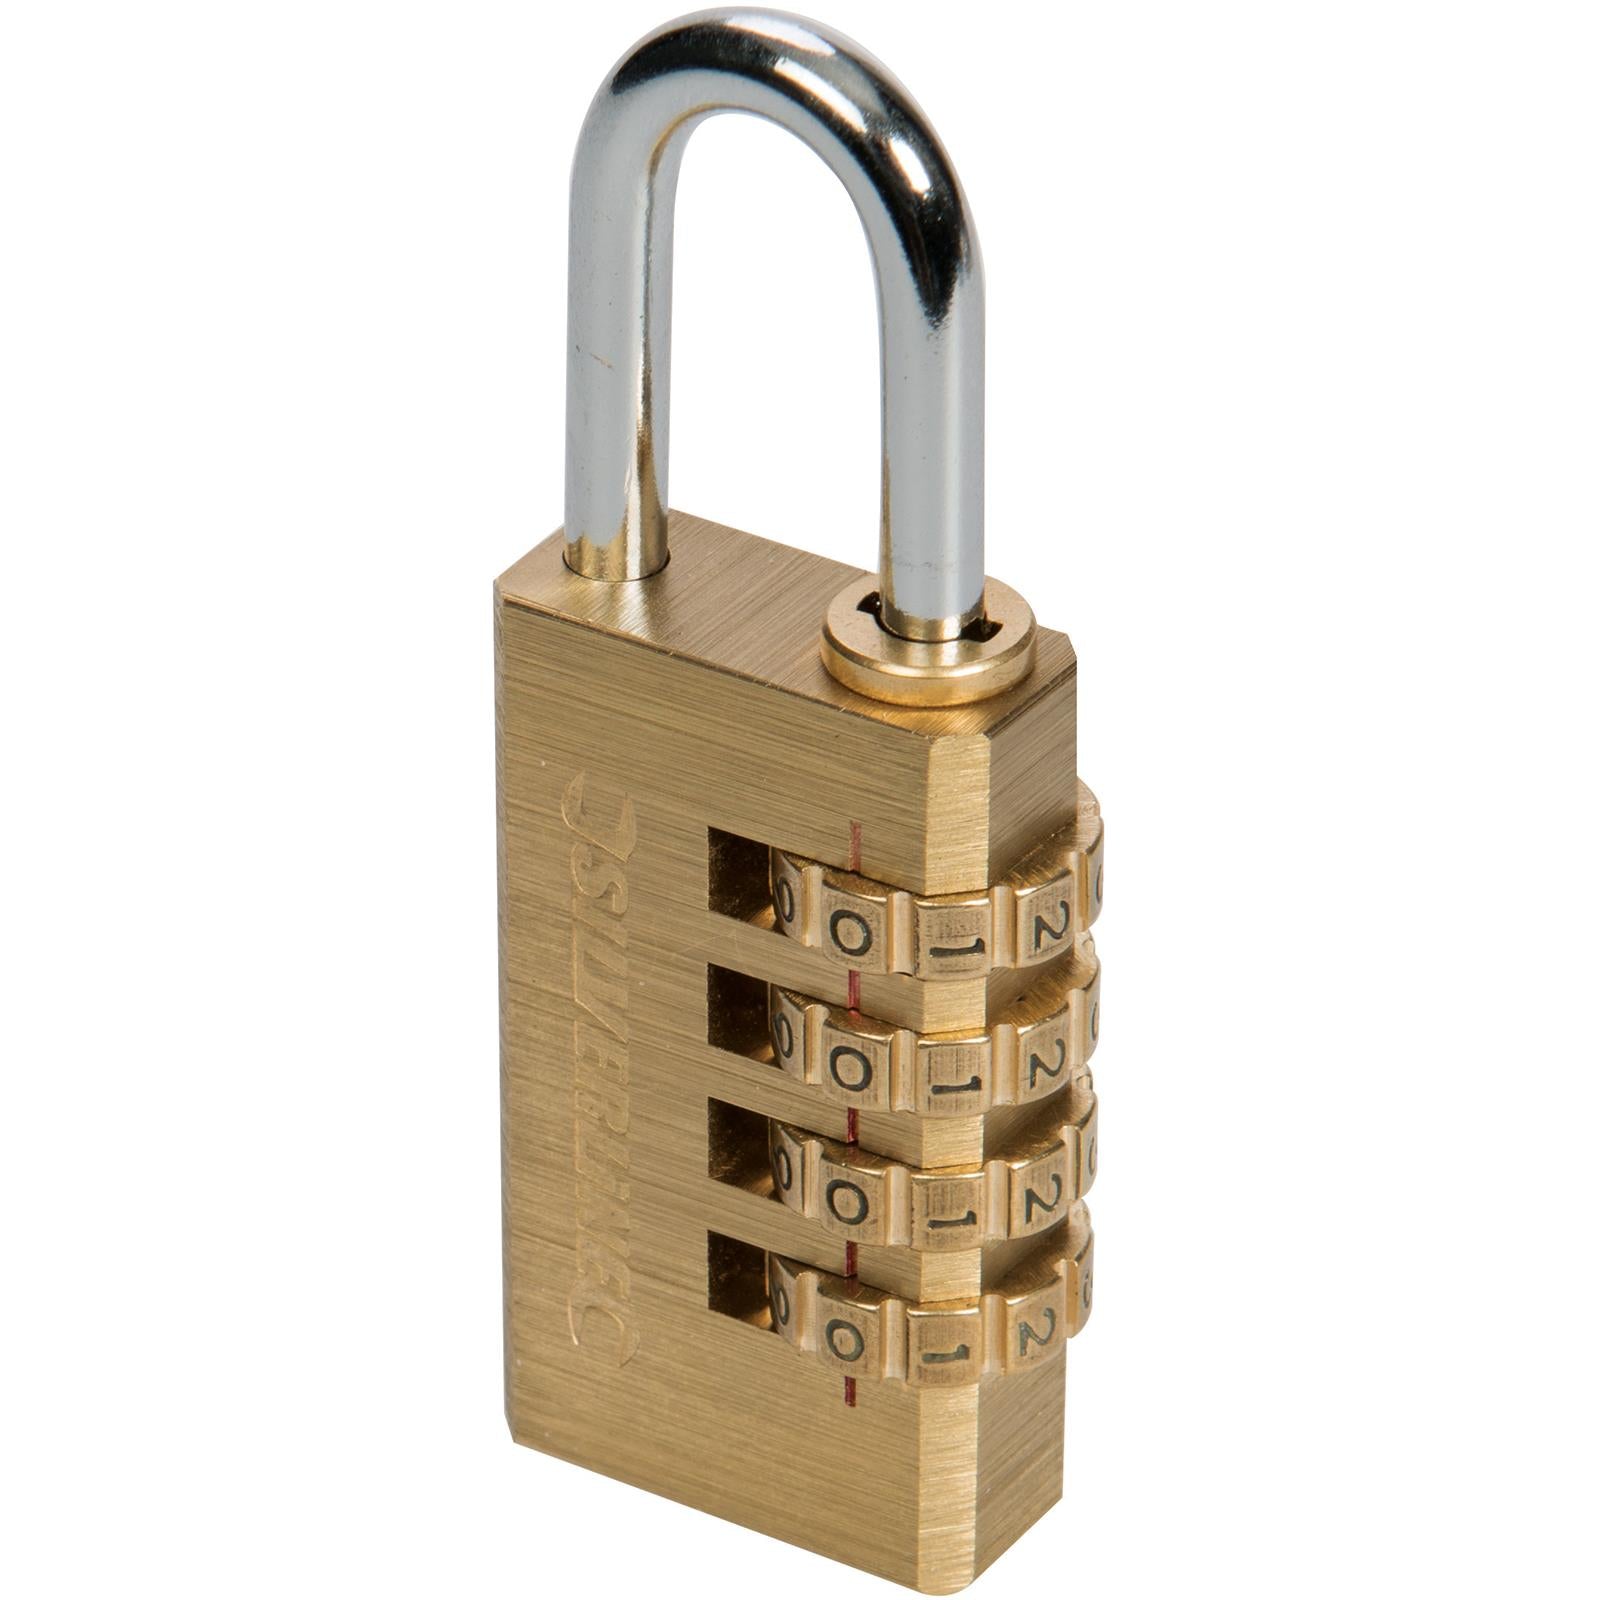 Silverline 4-Digit Combination Brass Padlock Steel Shackle Security Gate Shed